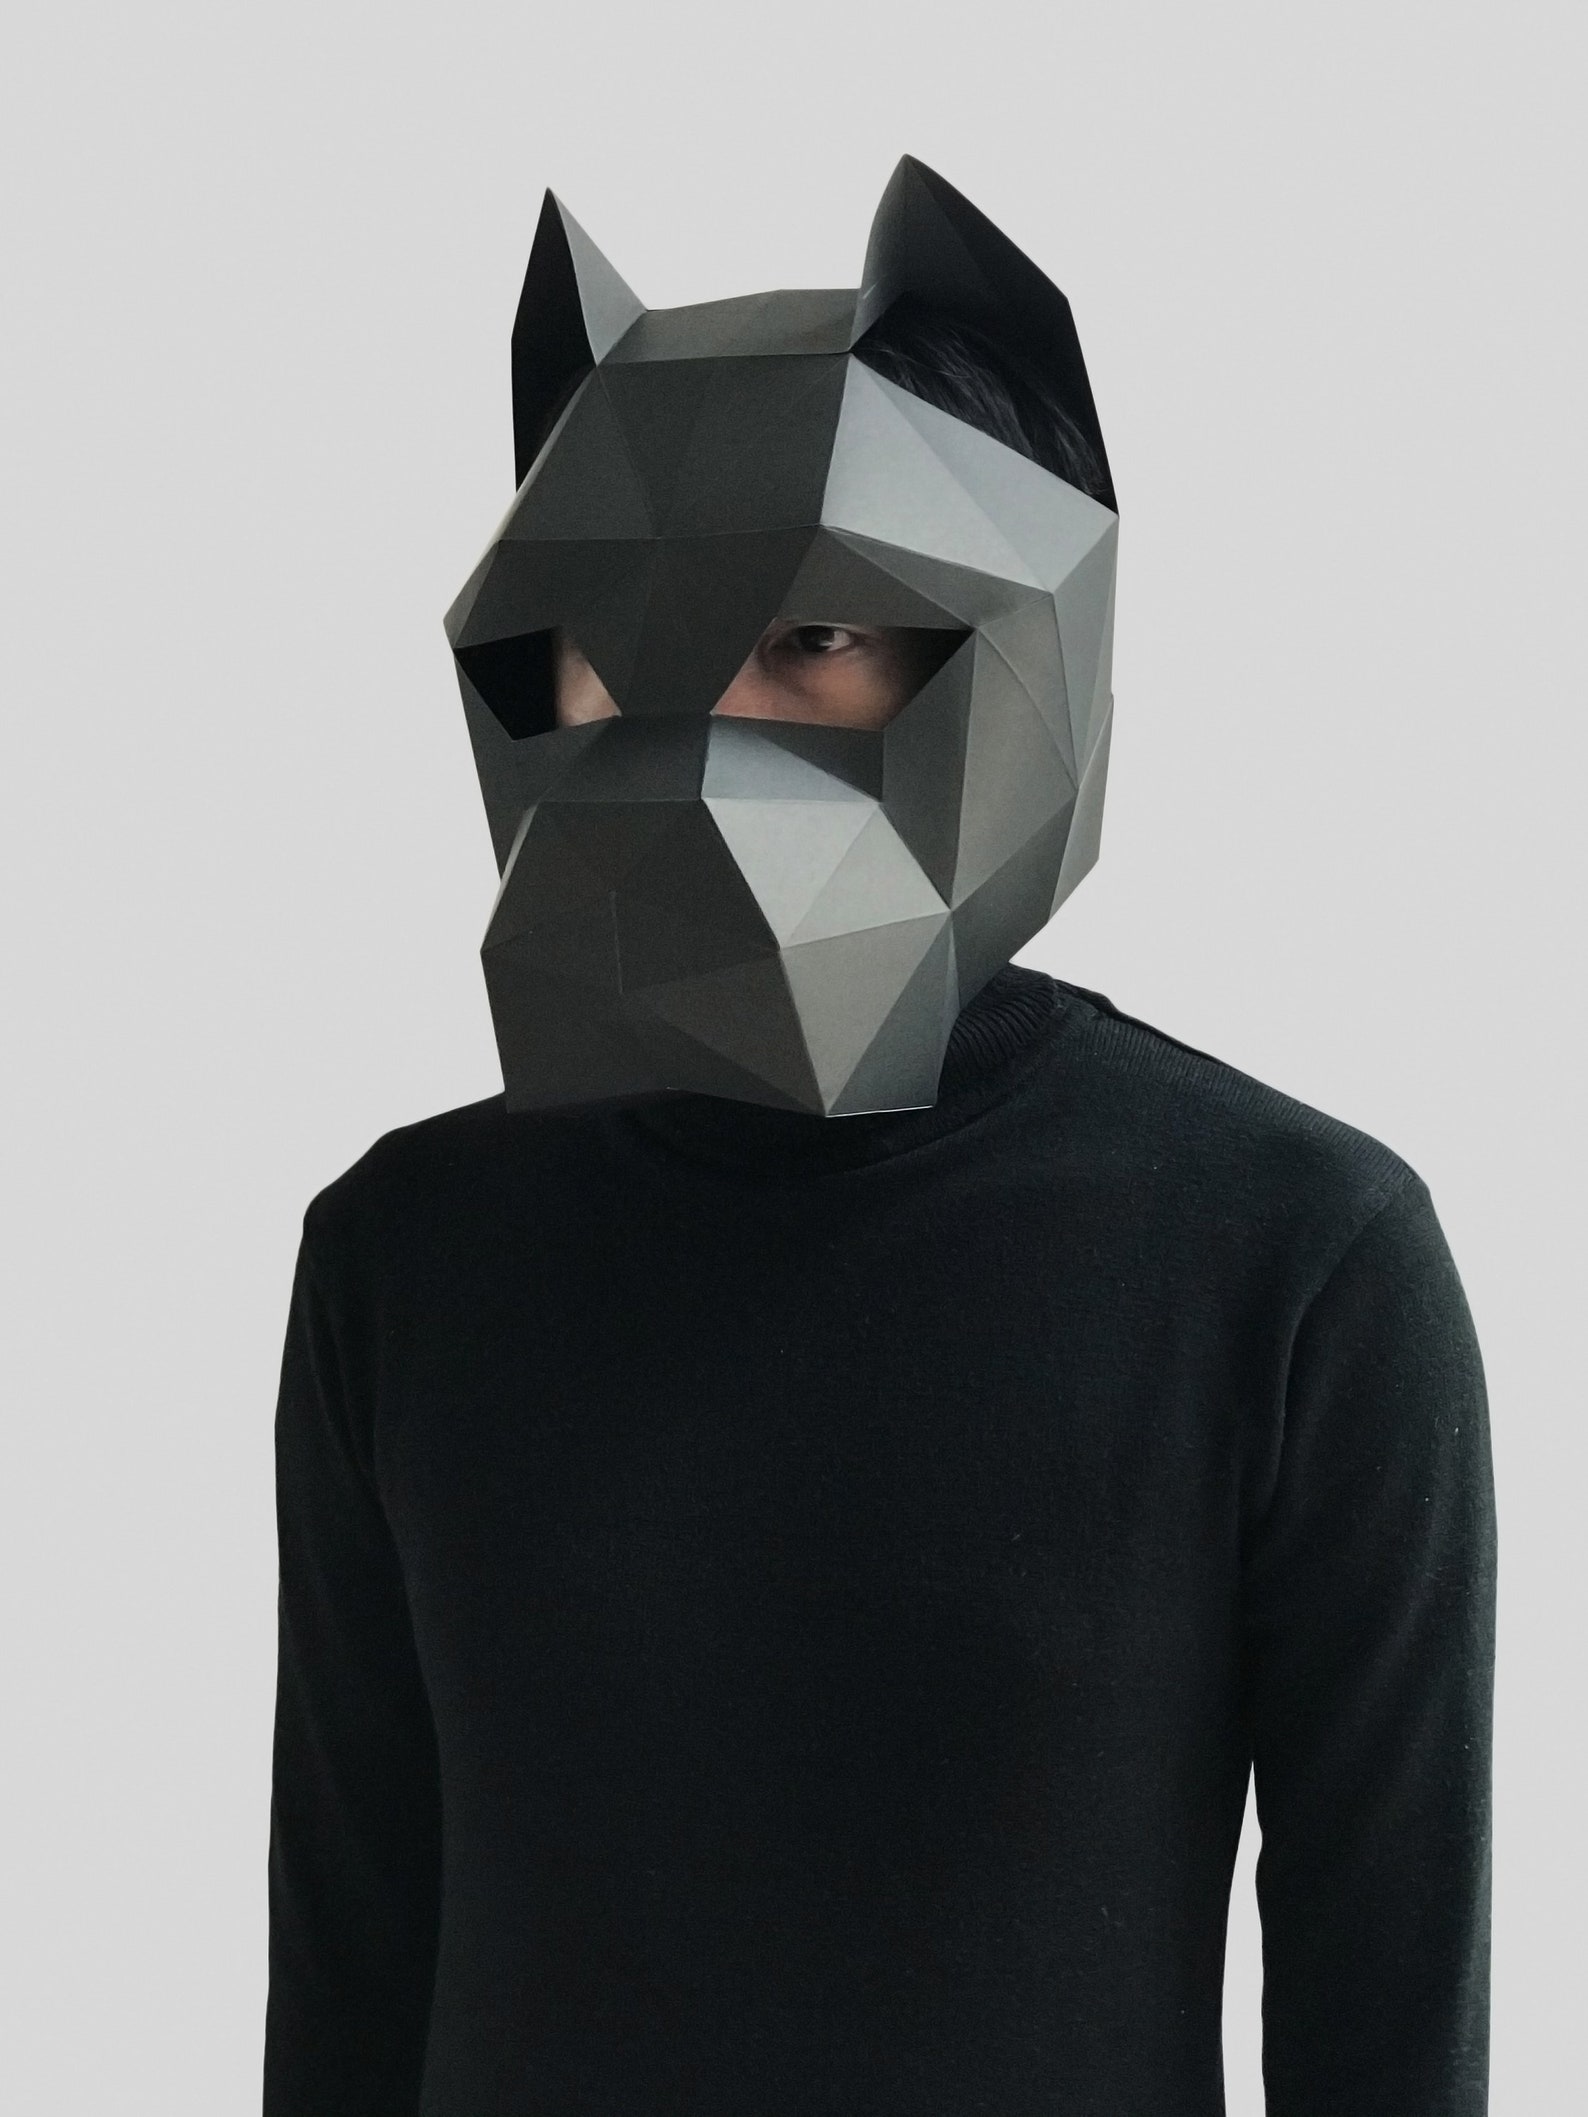 Cane Corso Dog Mask Template Paper Mask Papercraft Mask | Etsy